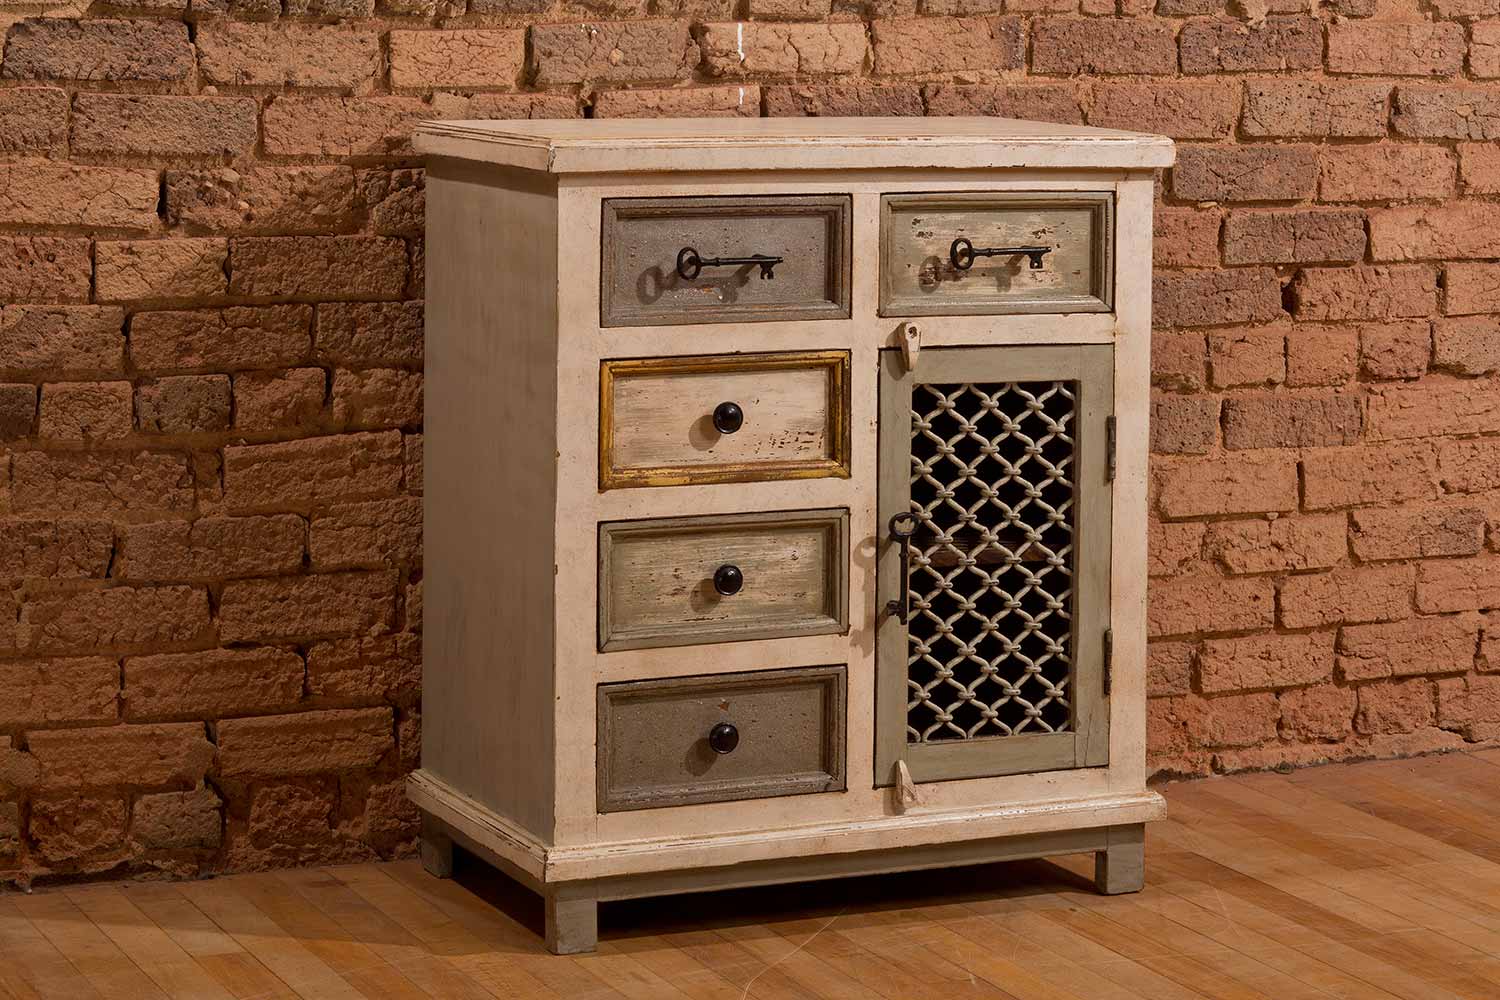 Hillsdale LaRose Five Drawer One Door Cabinet with Chicken Wire - Dove Gray/Antique White